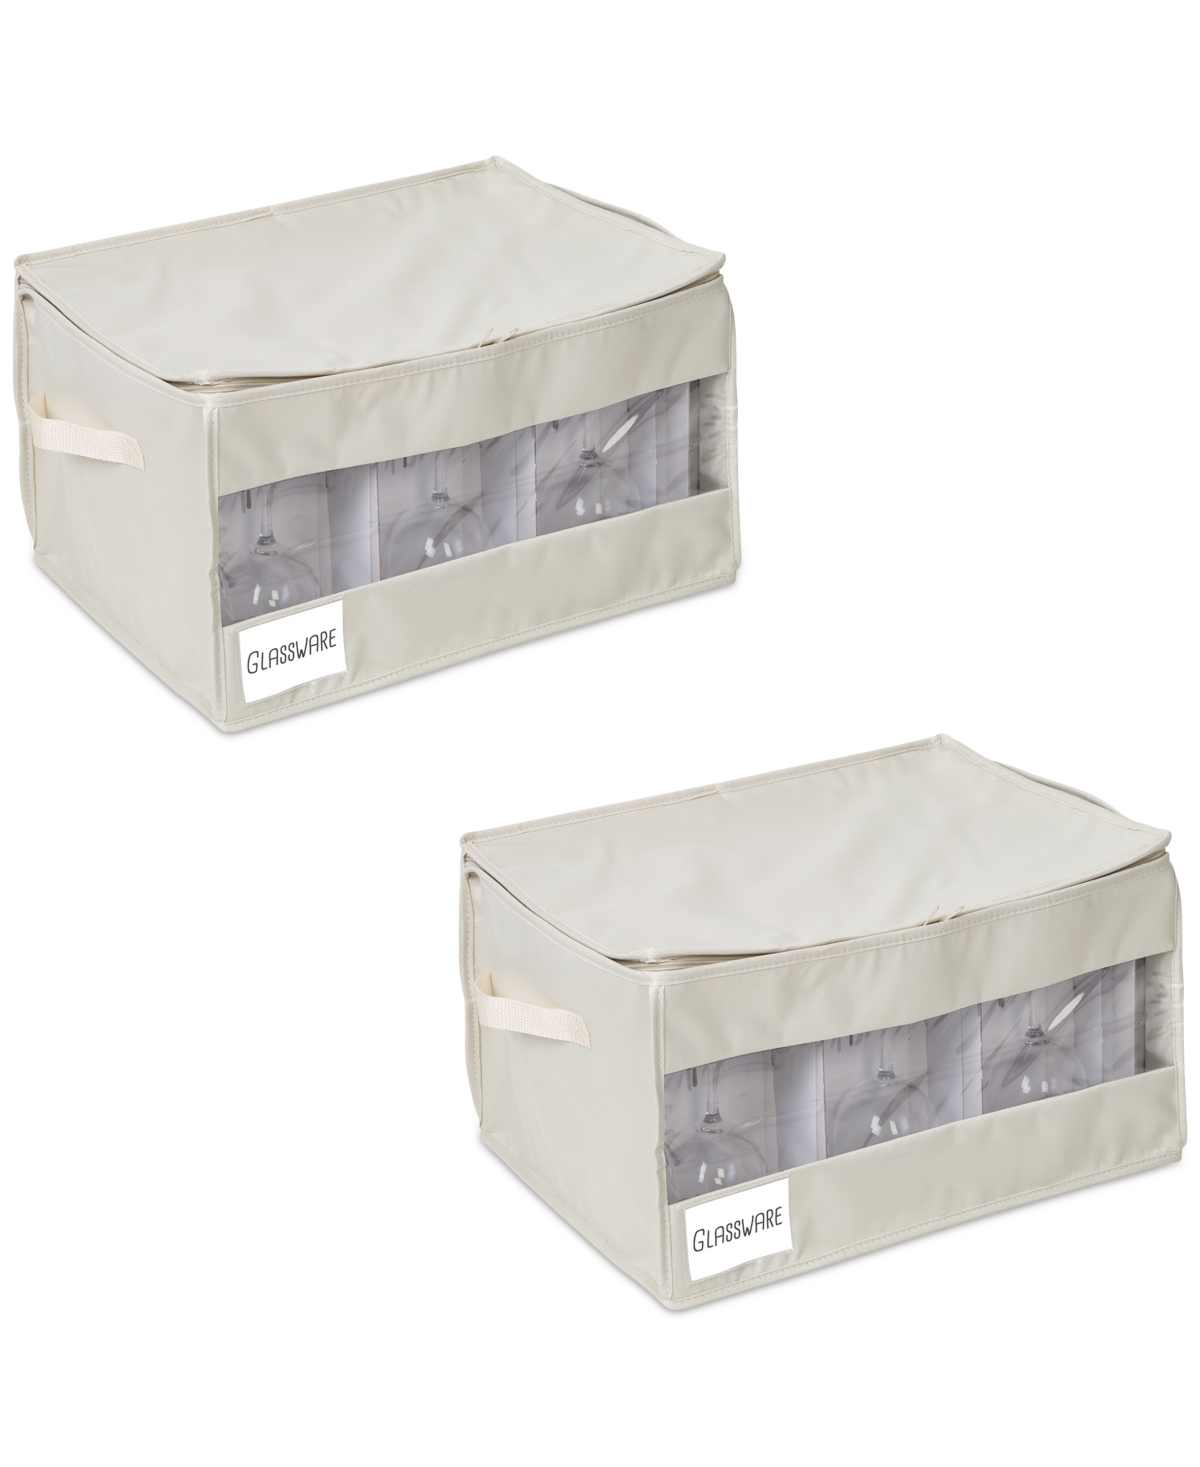 Stemware Storage Boxes, Set of 2 - Natural